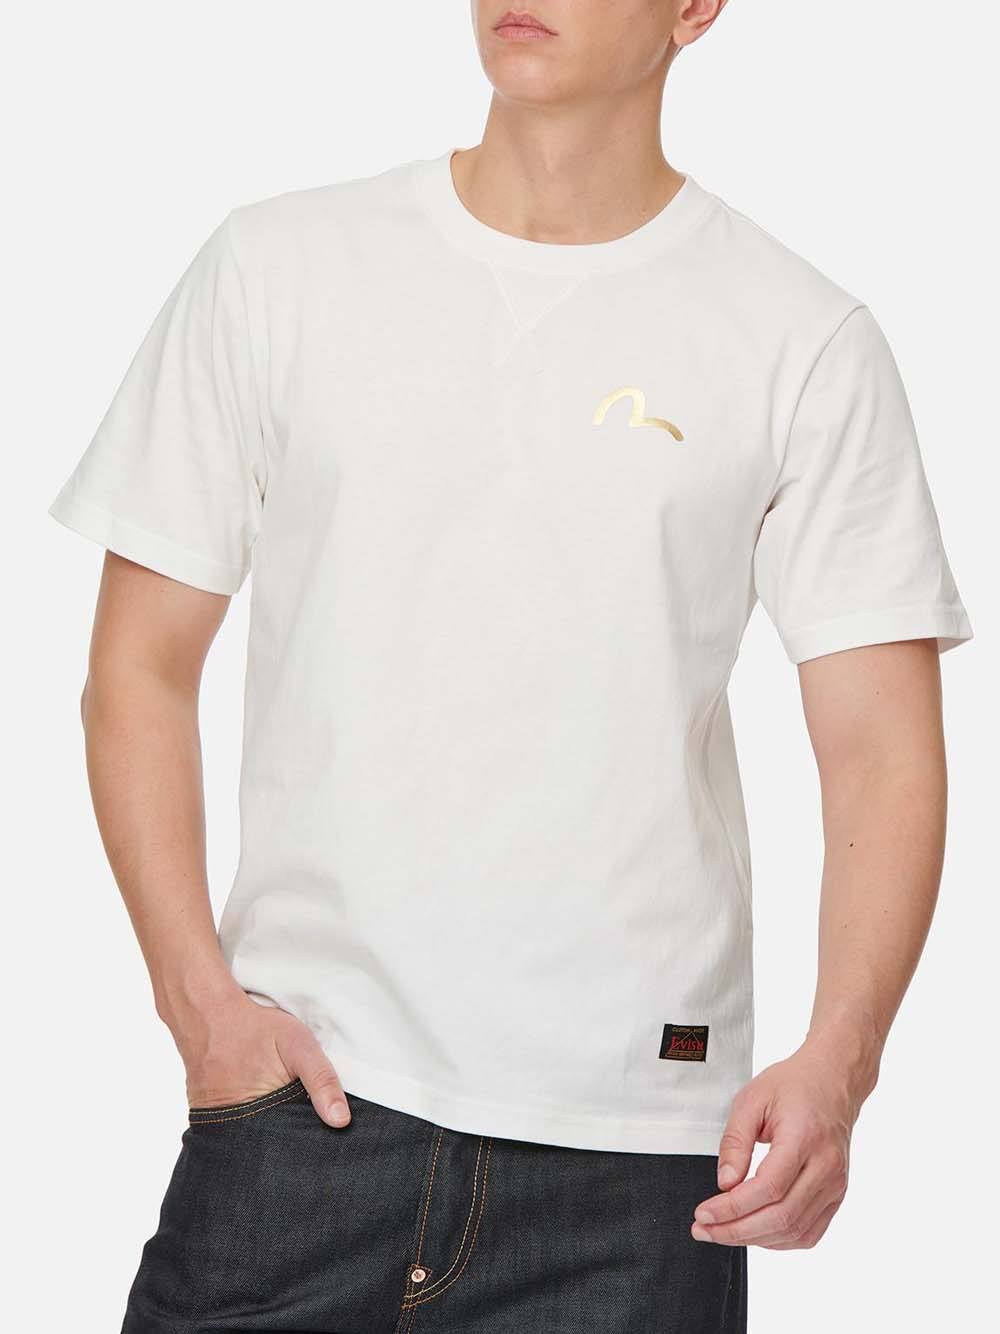 EVISU Graphic Gradated Print T-Shirt White - MAISONDEFASHION.COM